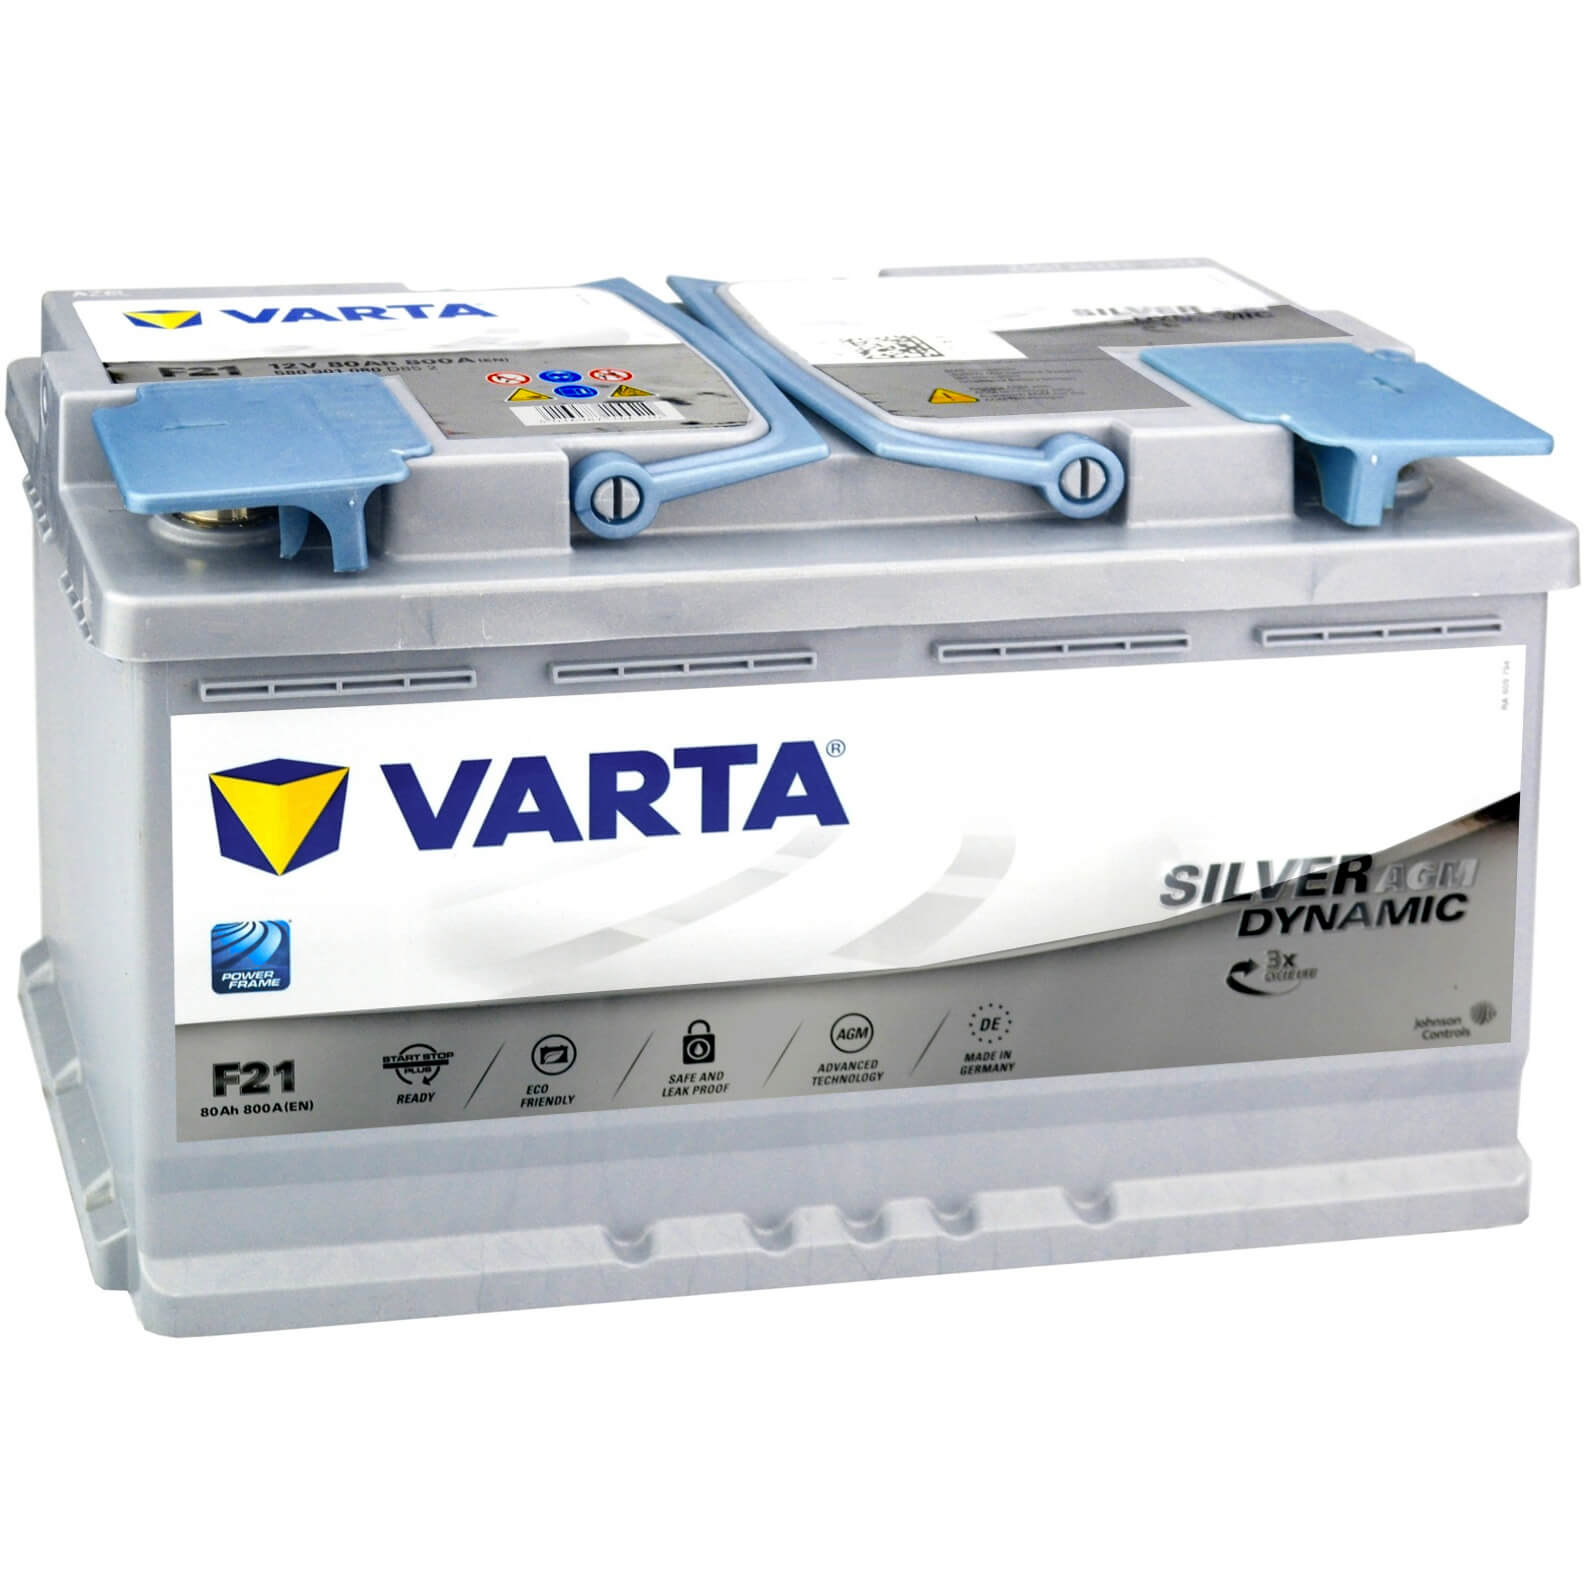 VARTA BATTERY 80AH AGM / VB580901 / F21 For MERCEDES BENZ